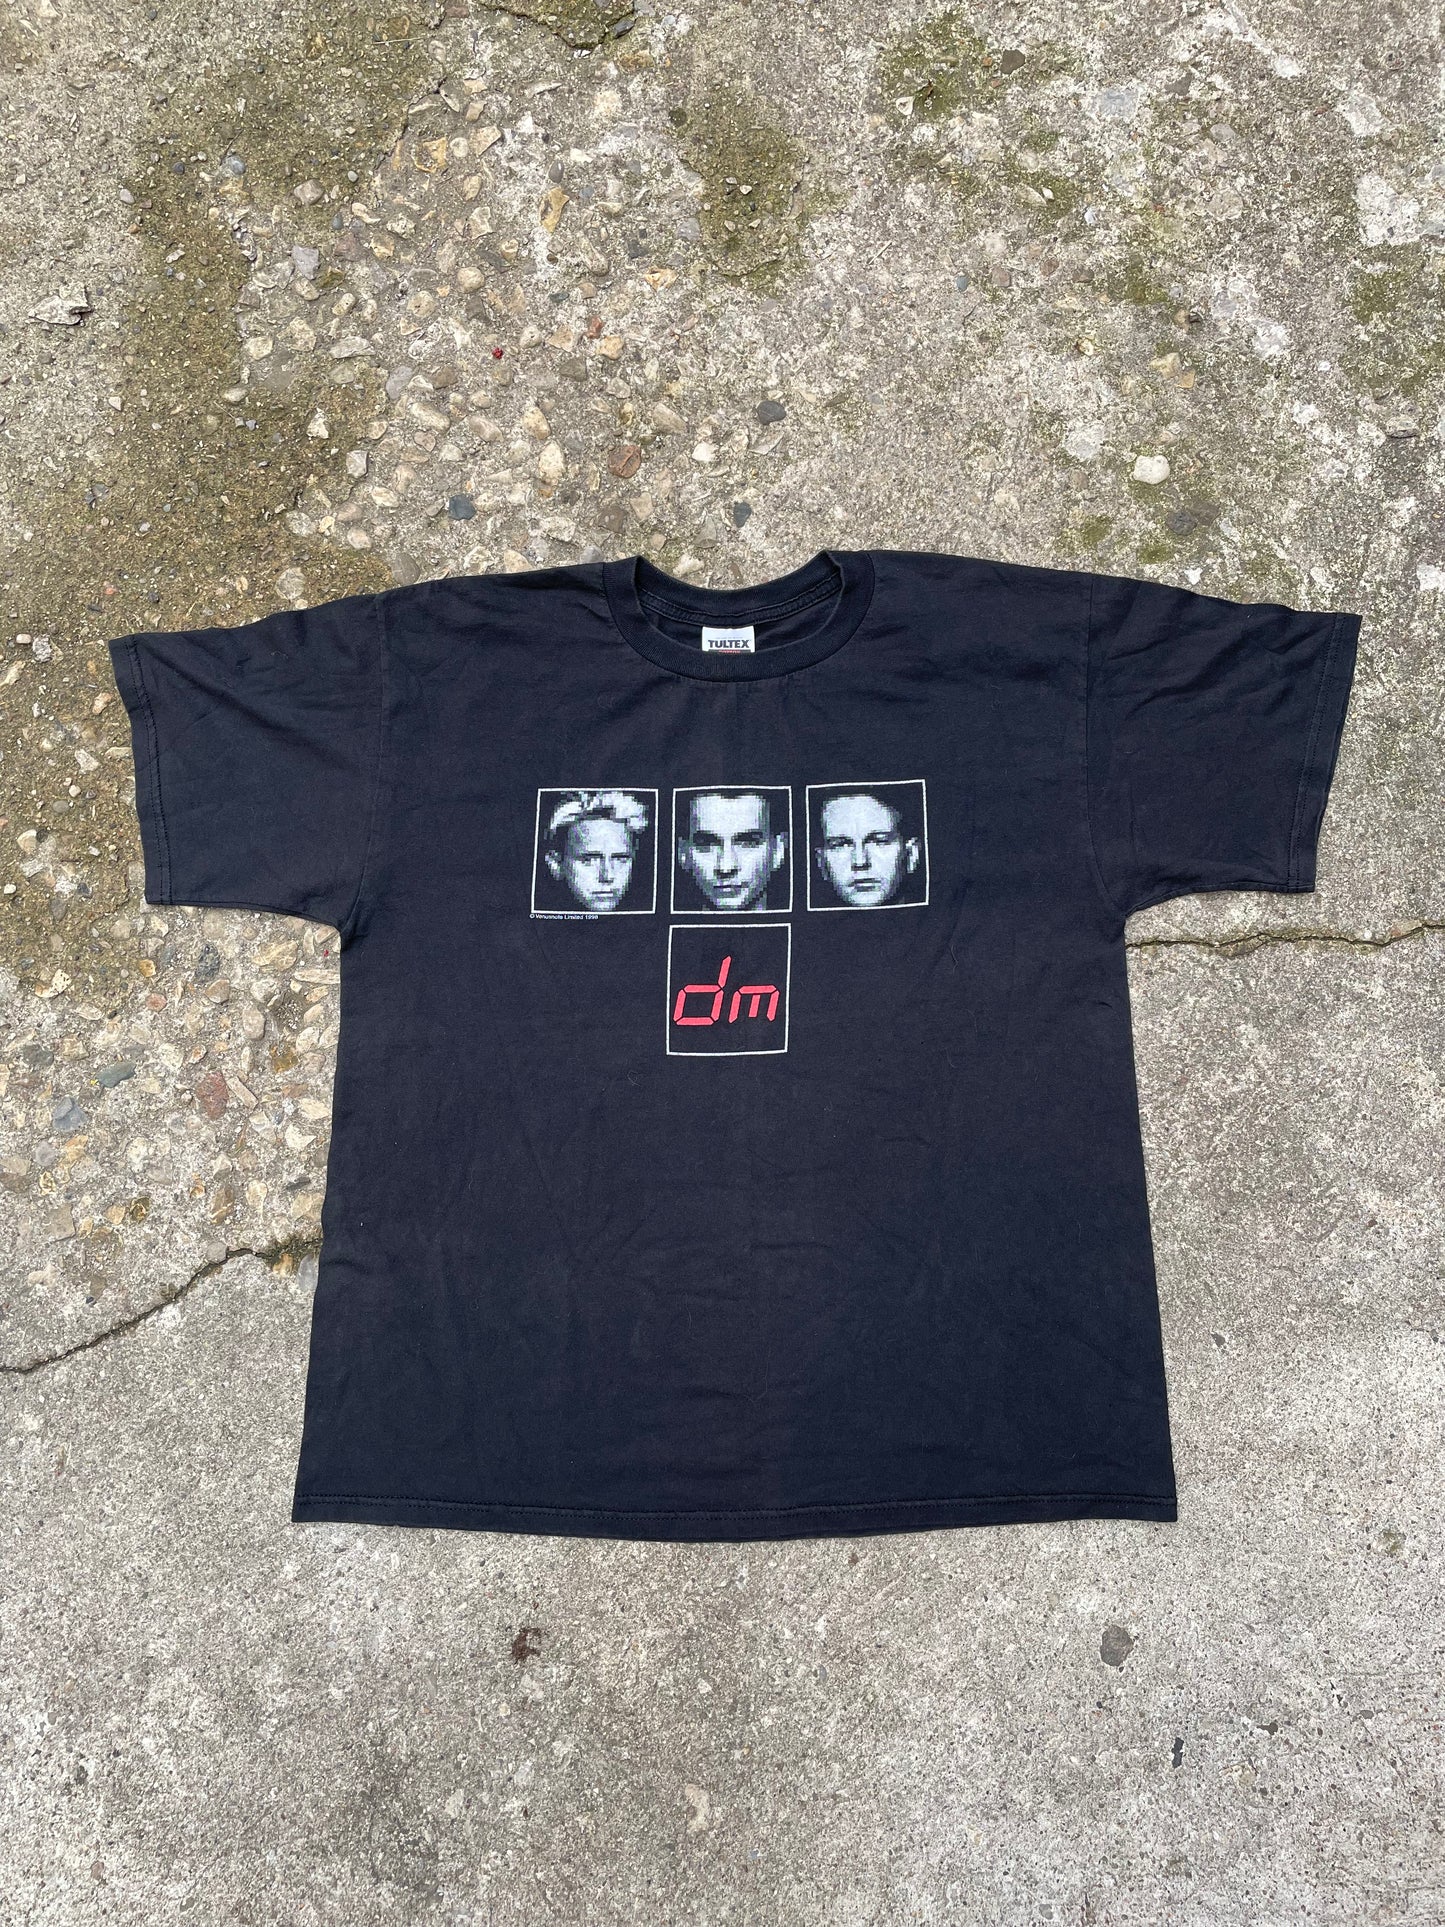 1998 Depeche Mode 'The Singles' Tour Band T-Shirt - XL